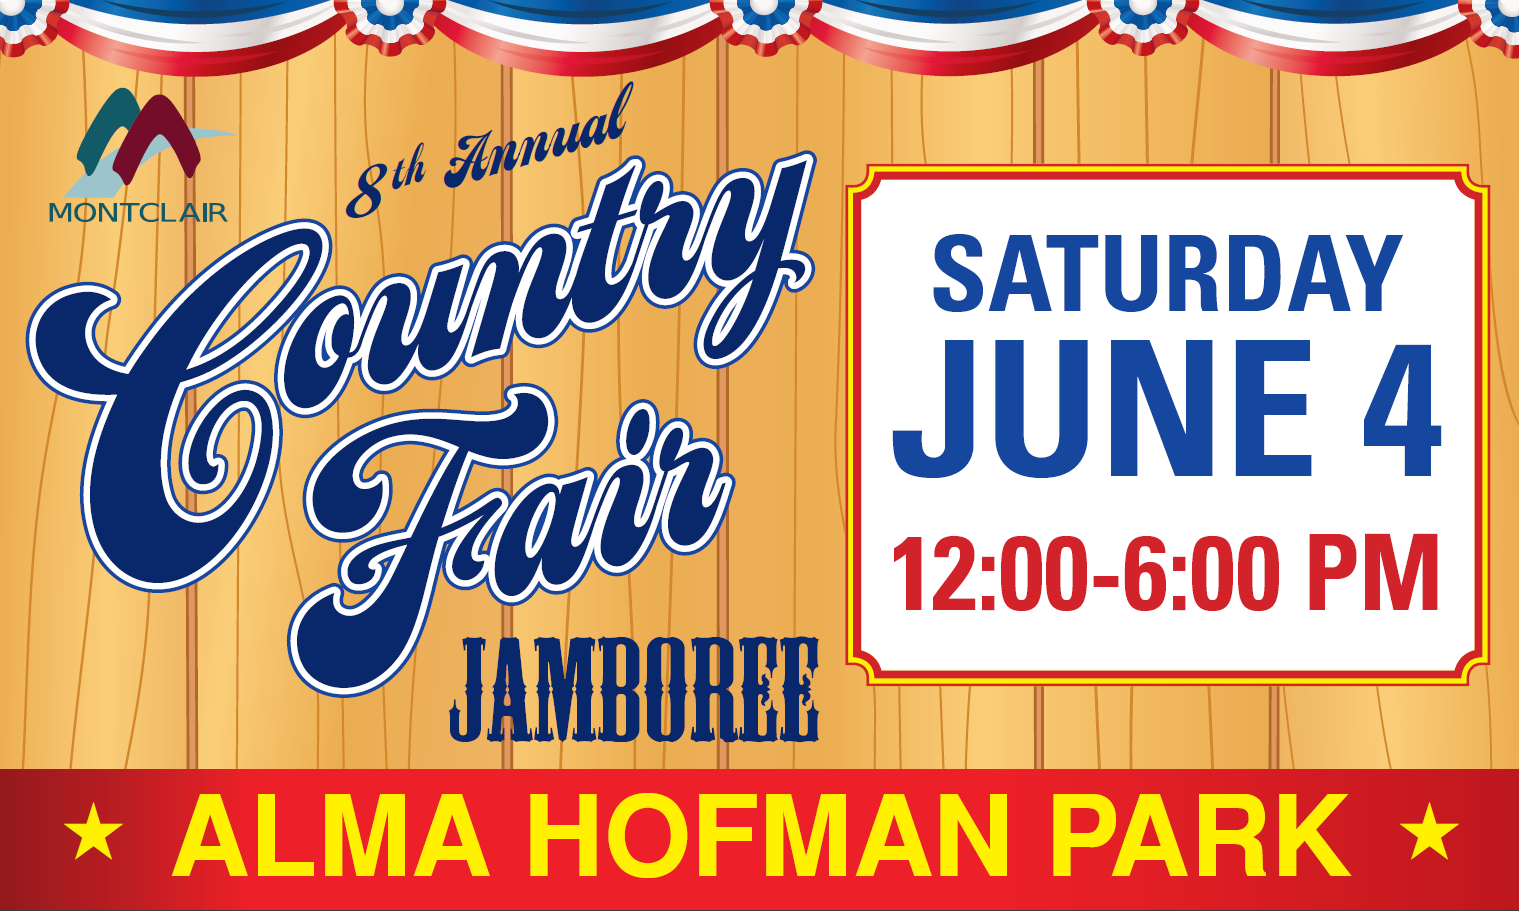 Country Fair Jamboree 2022 Save the Date Saturday, June 4, 2022 from 12:00 p.m. to 6:00 p.m. at Alma Hofman Park 